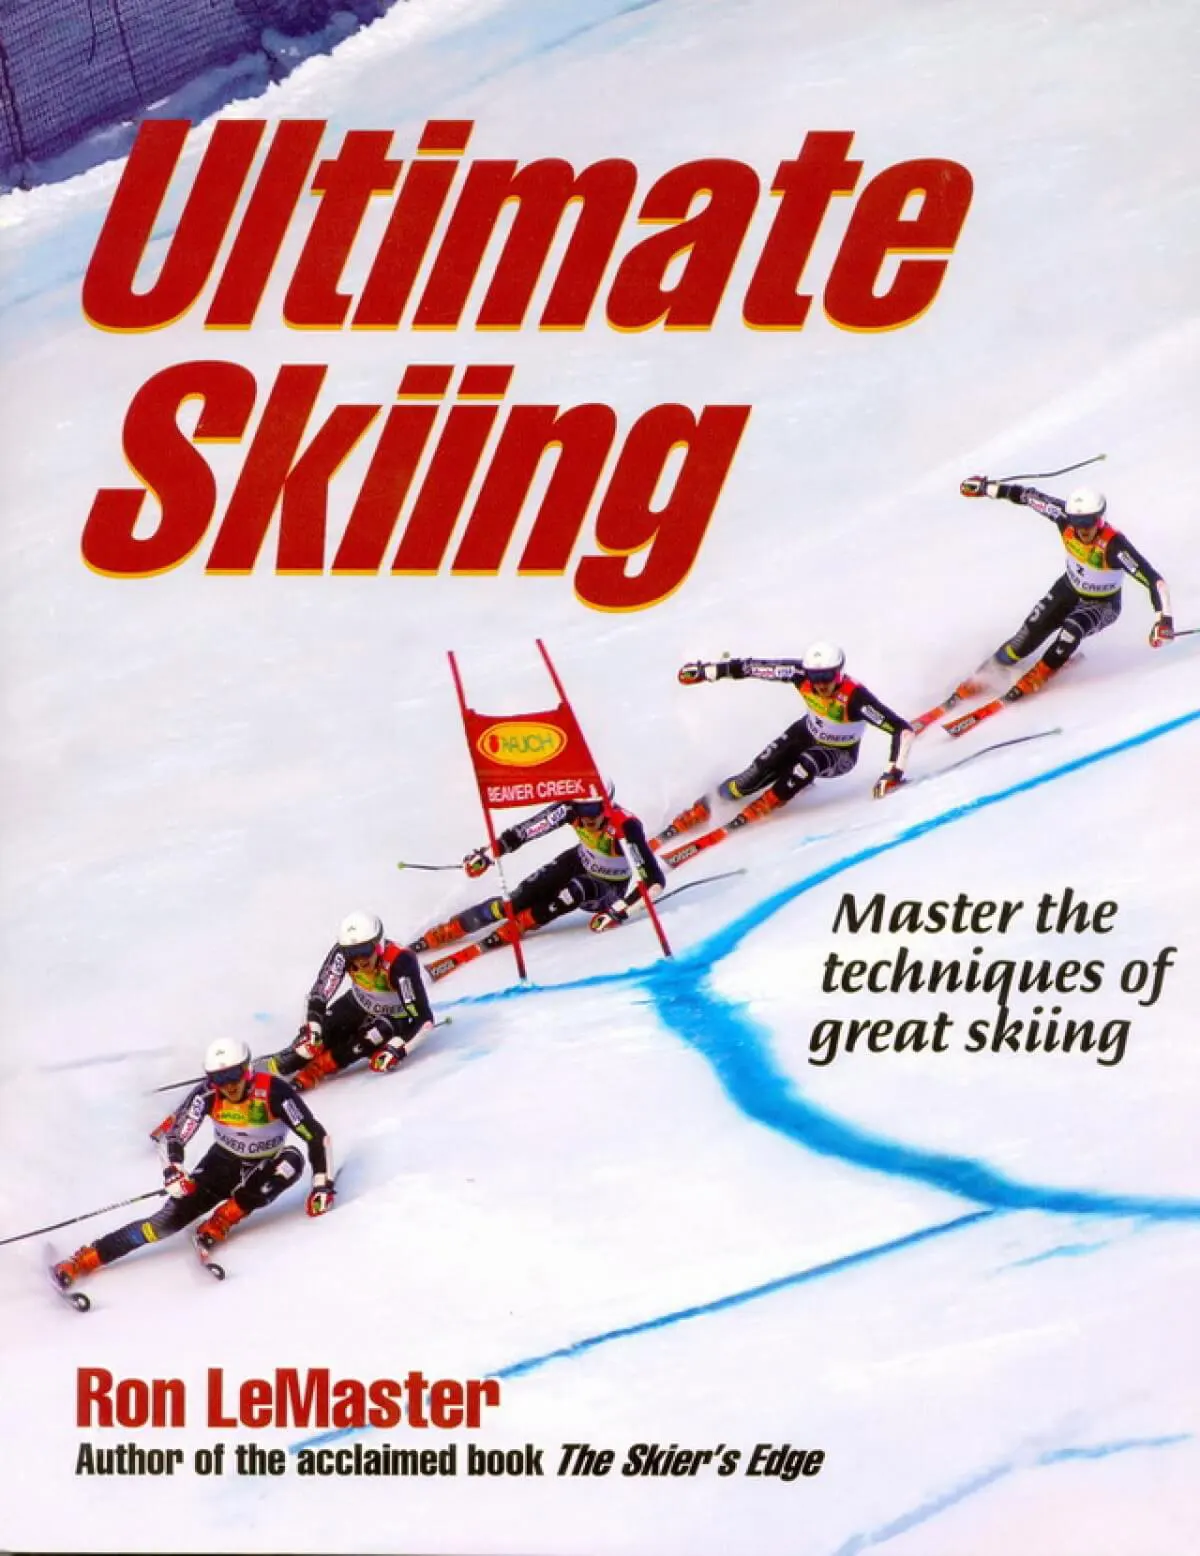 ltimate skiing book - Ron LeMaster